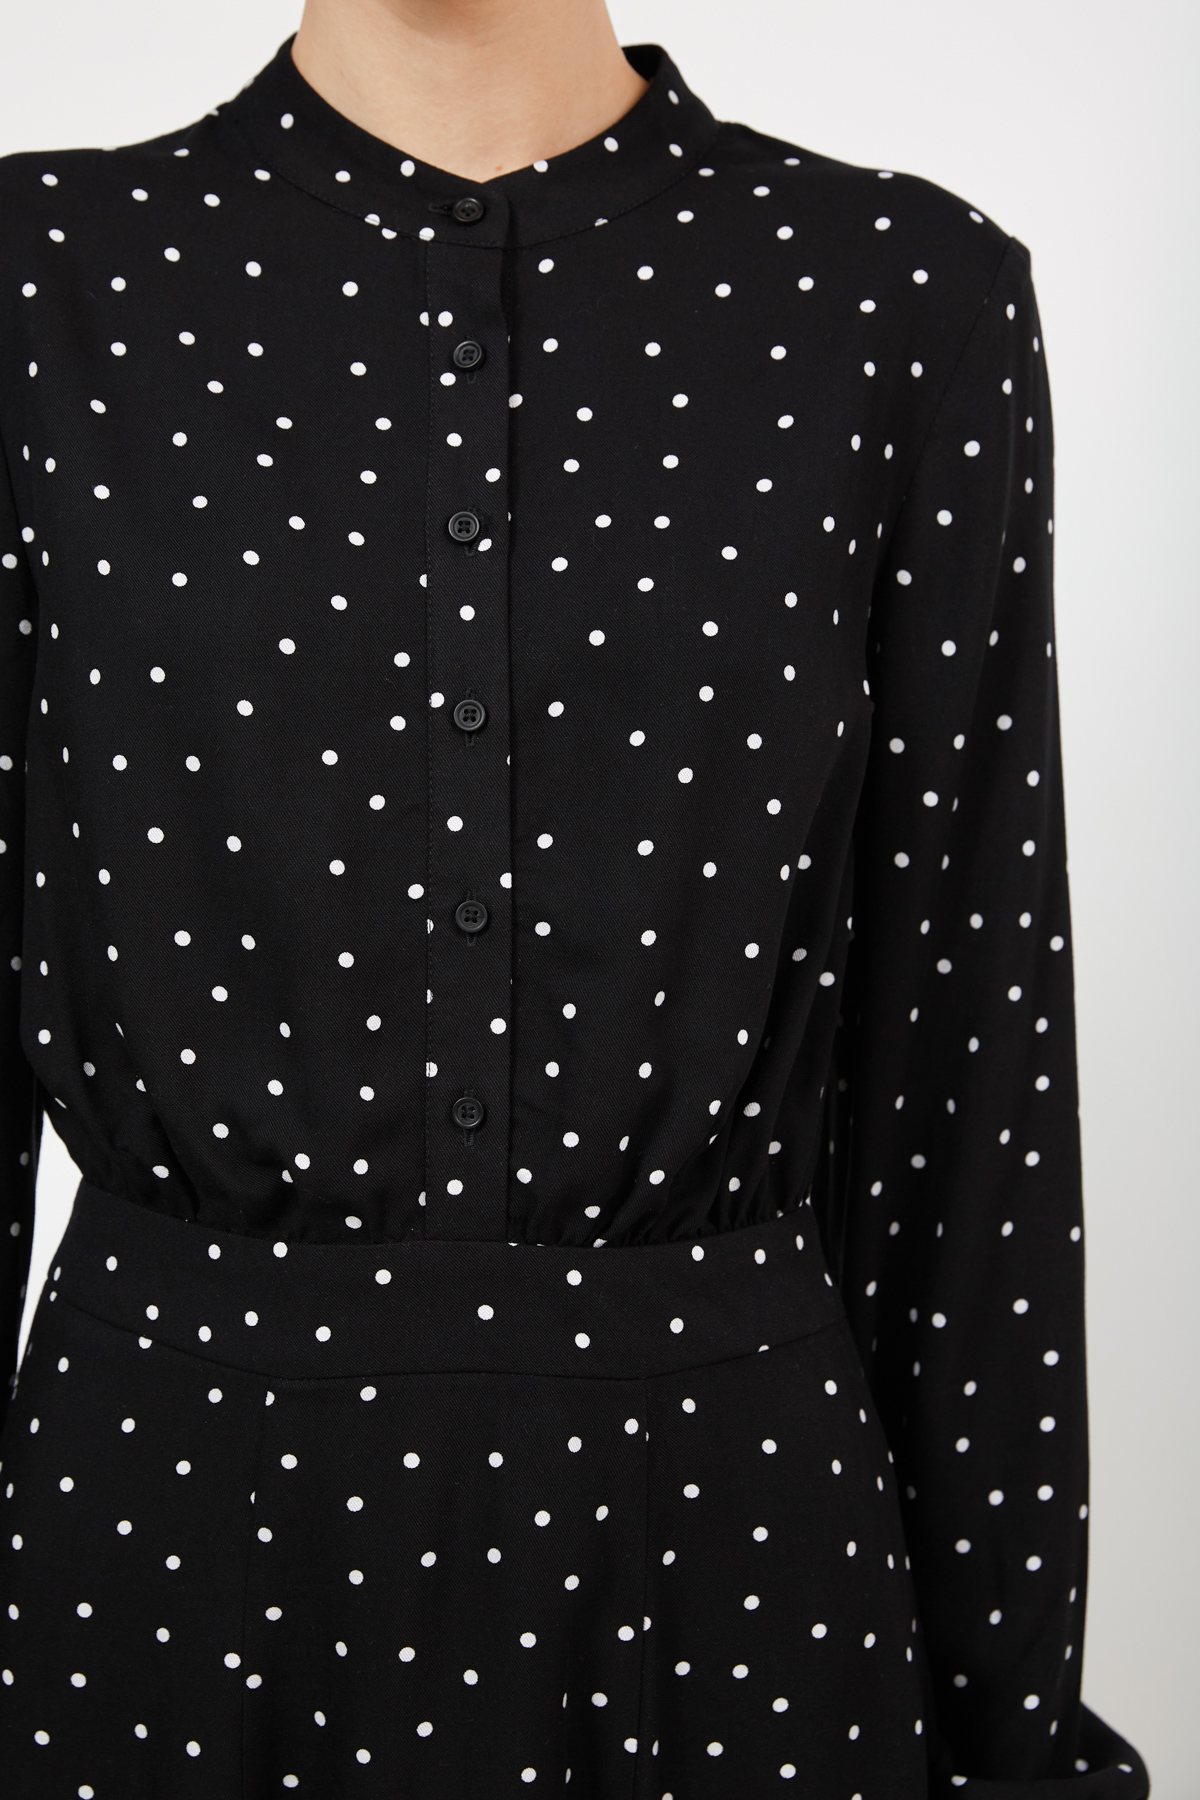 Viscose short dress black in white polka dots print, photo 3